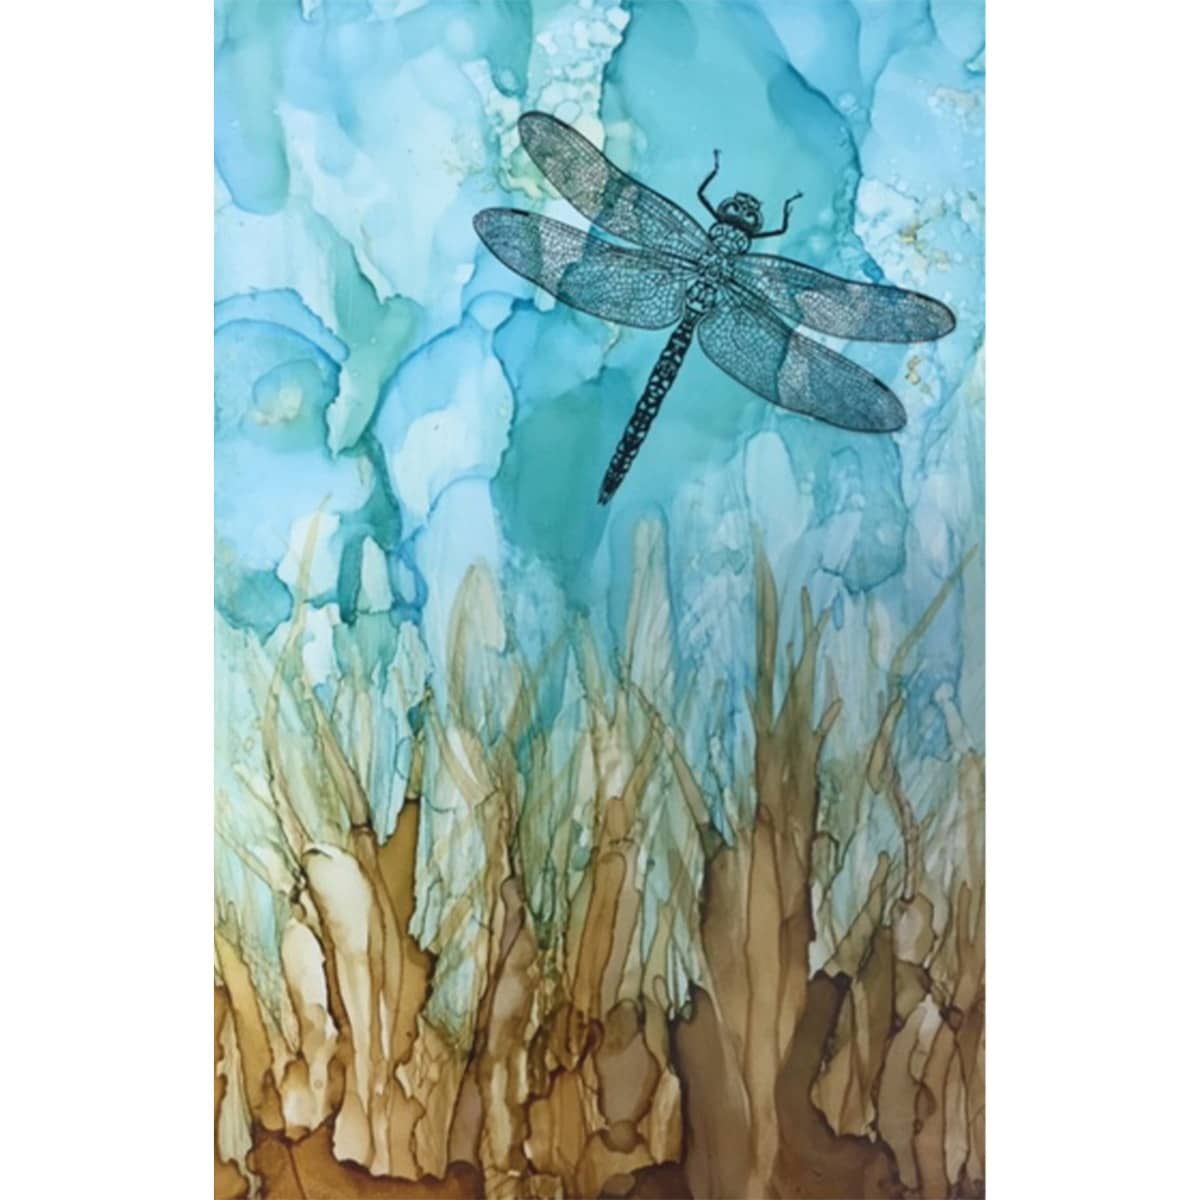 Cheryl Holtz - Dragonfly on Grafix Craft Plastic